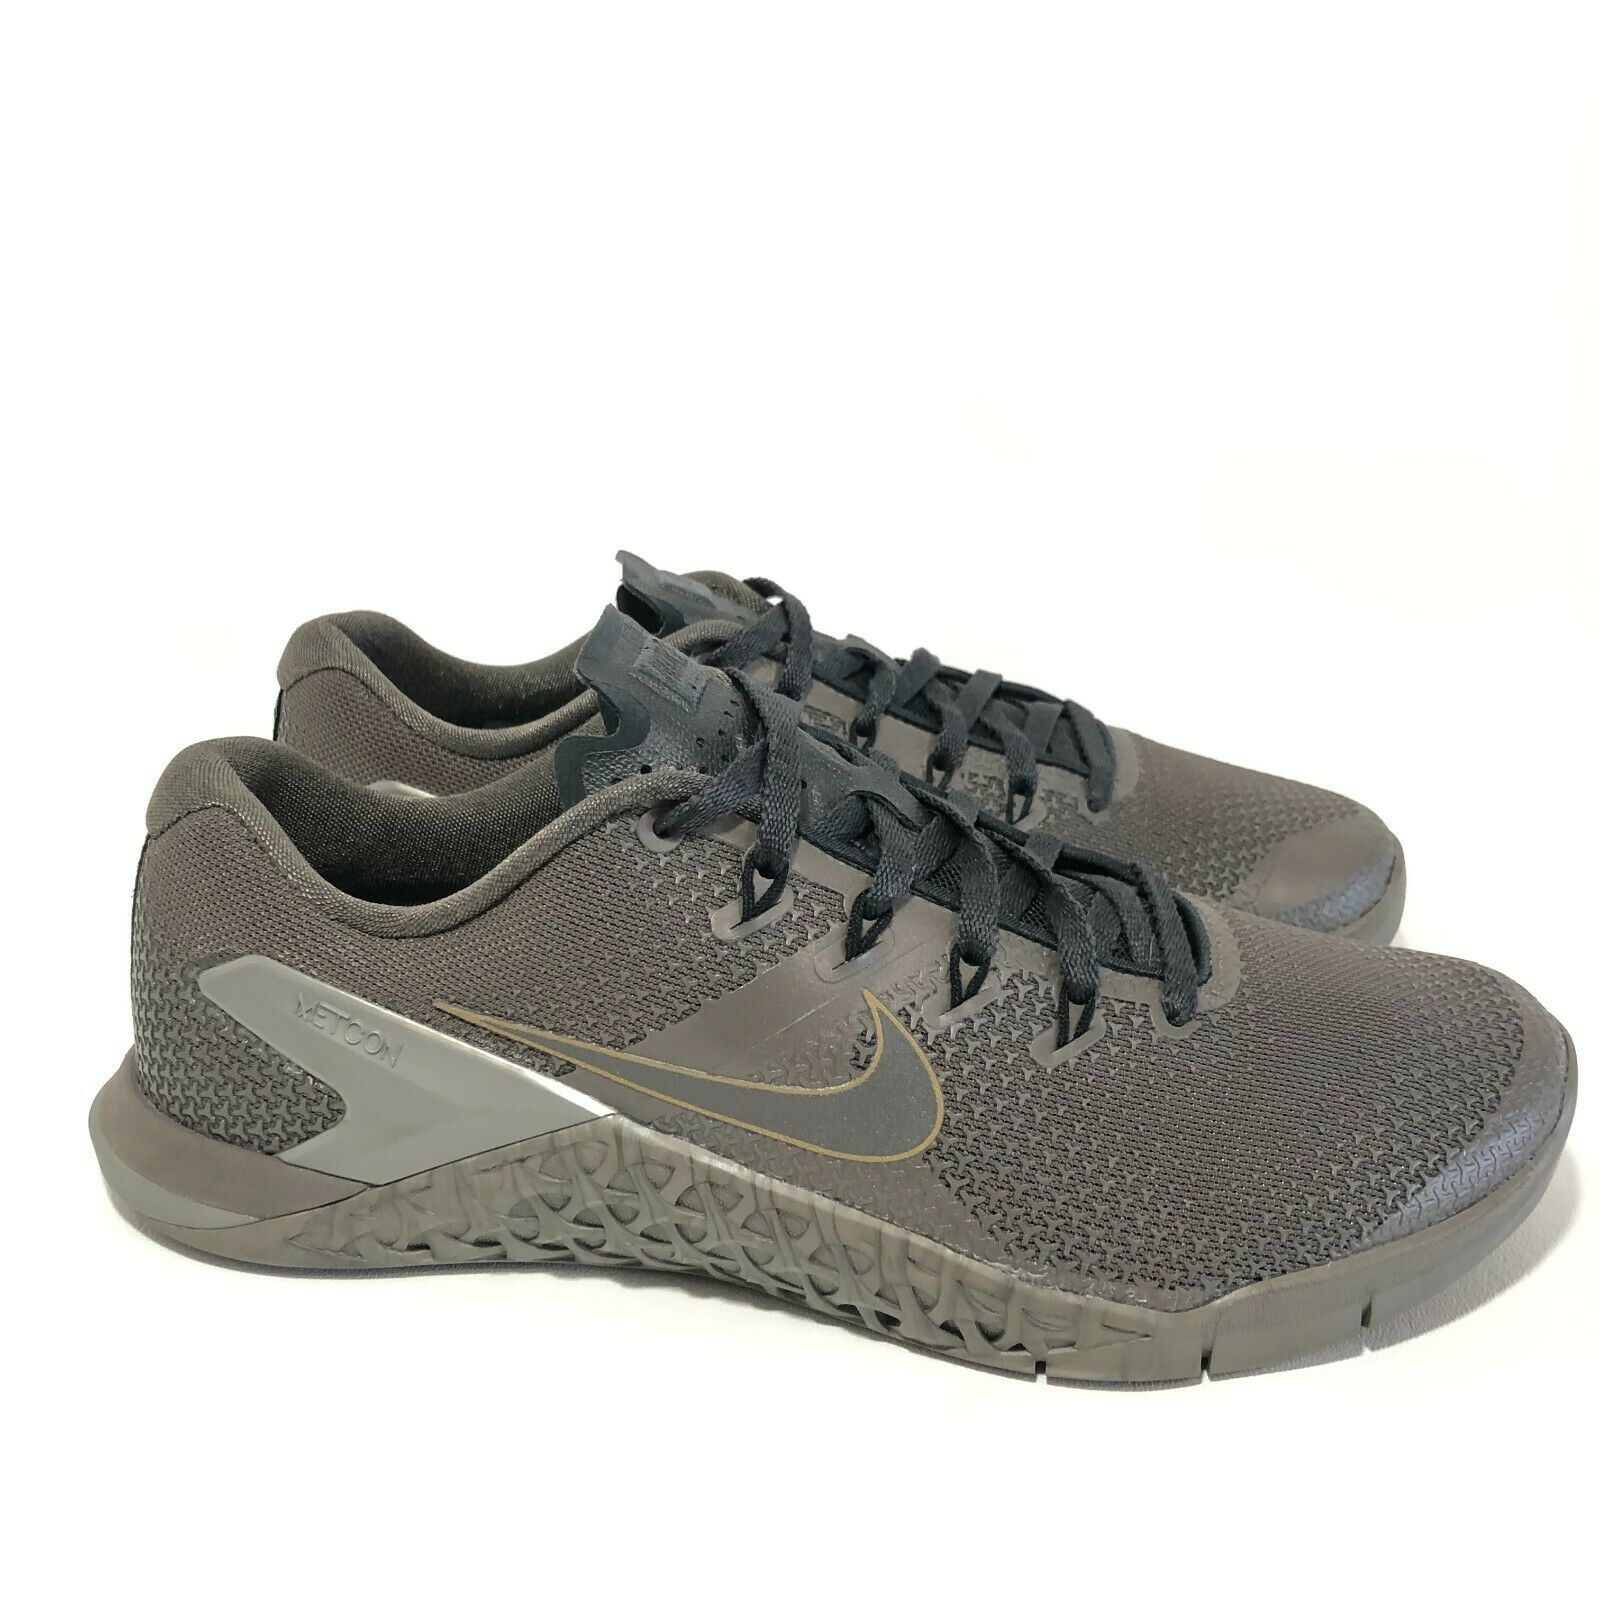 Nike Metcon 4 Viking Quest ‘Ridgerock’ Crossfit Shoes AJ9276-200 Men’s Size 8